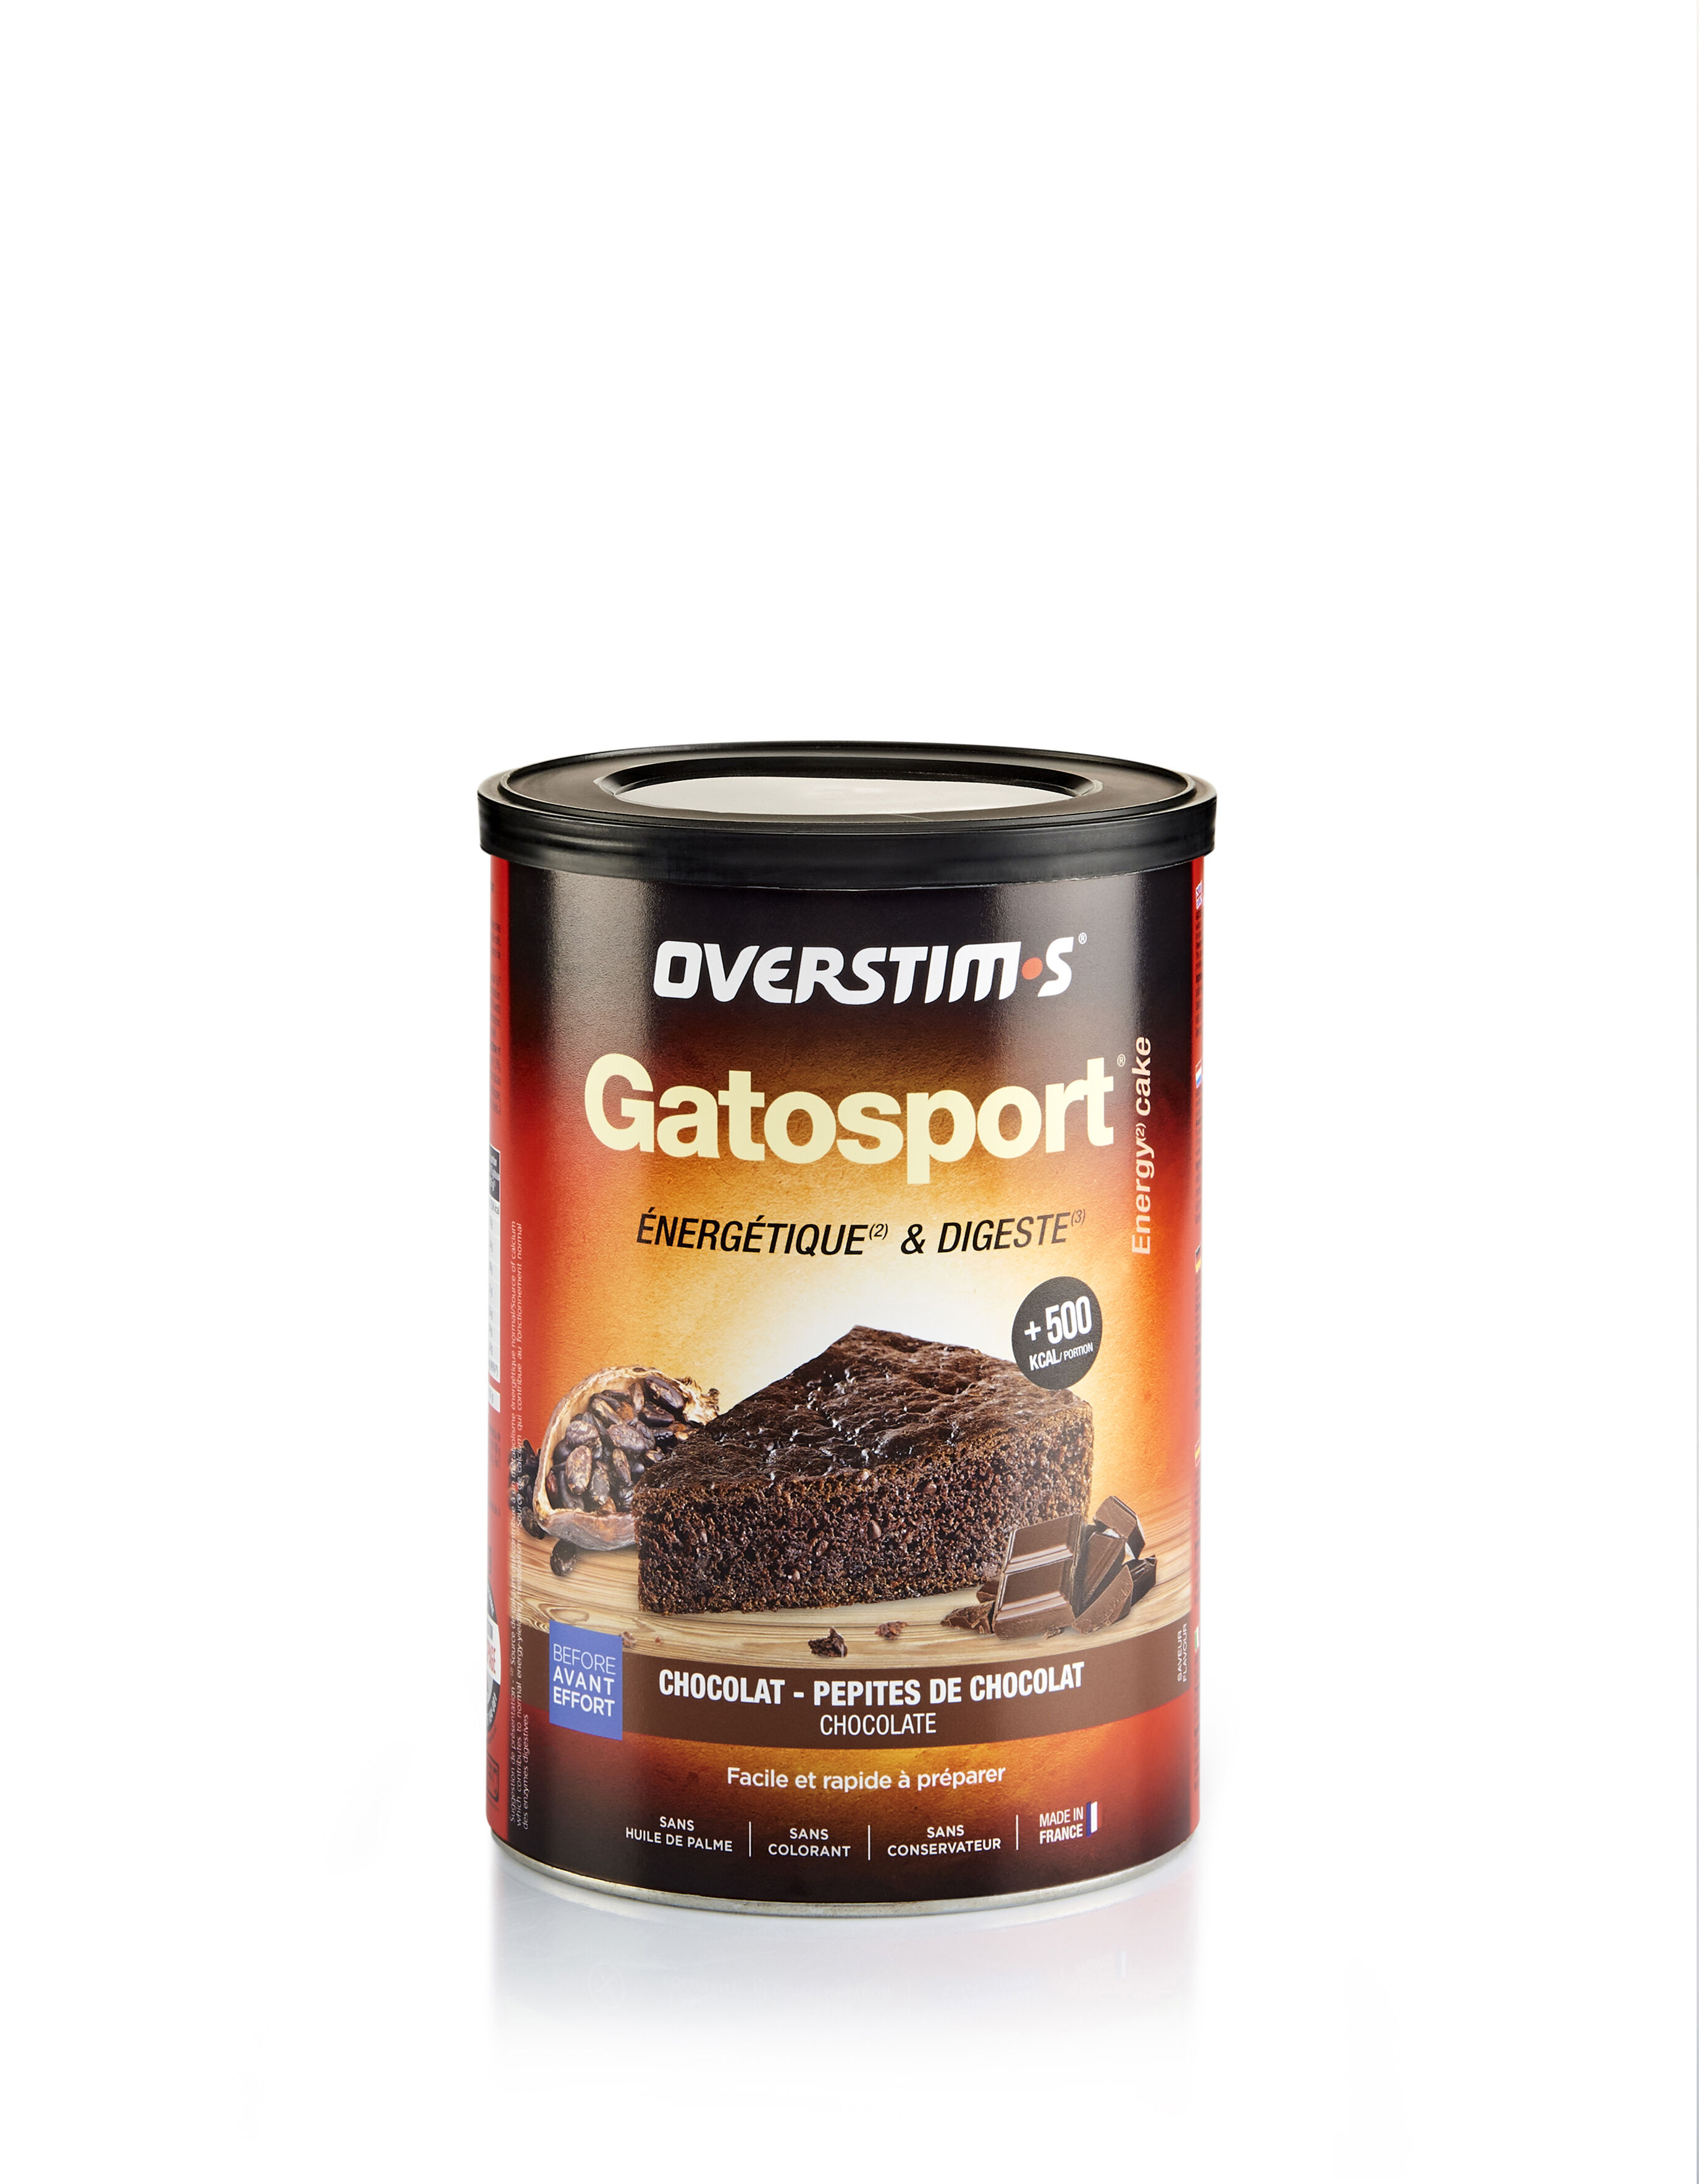 Overstim.s Gatosport - Energy cakes